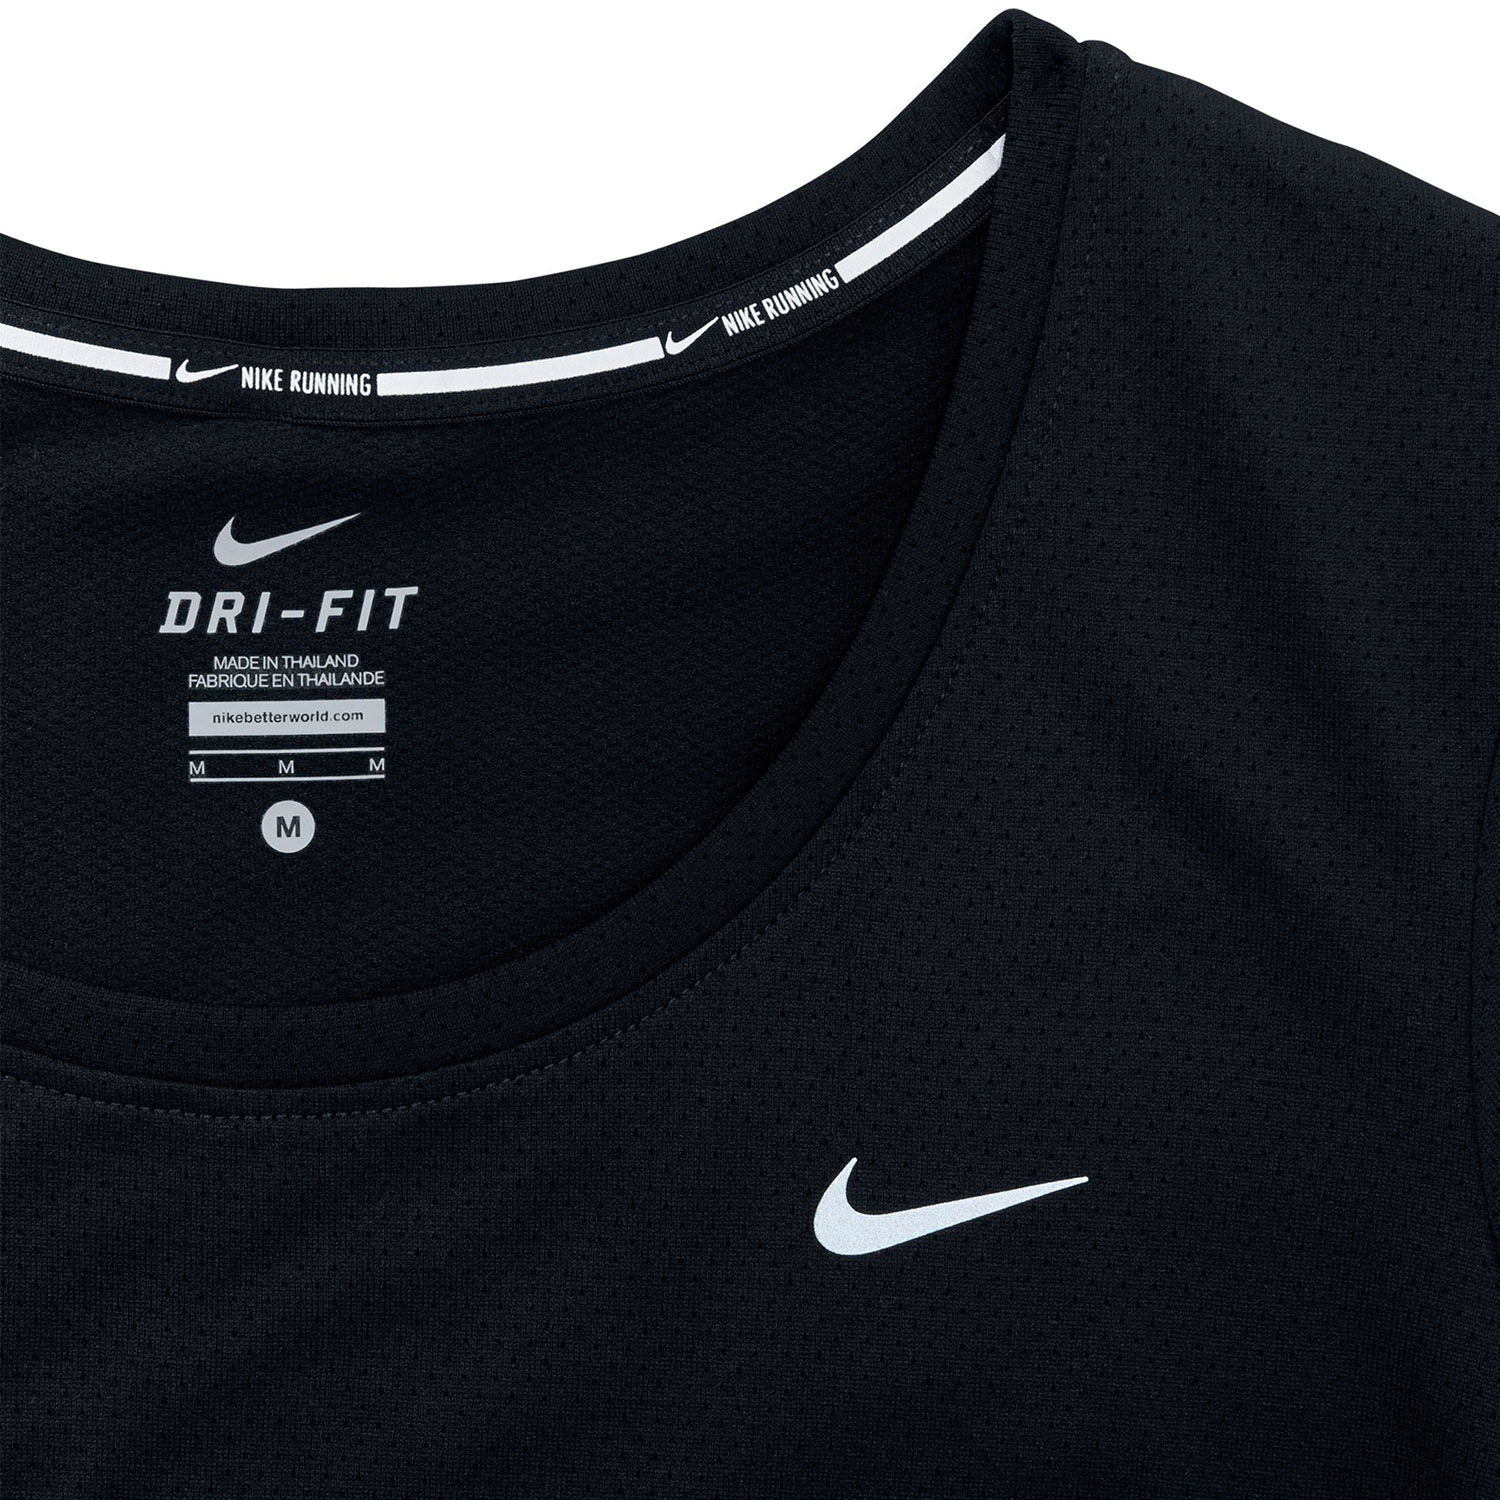 Nike Womens DRI FIT Short Sleeve Running Shirt